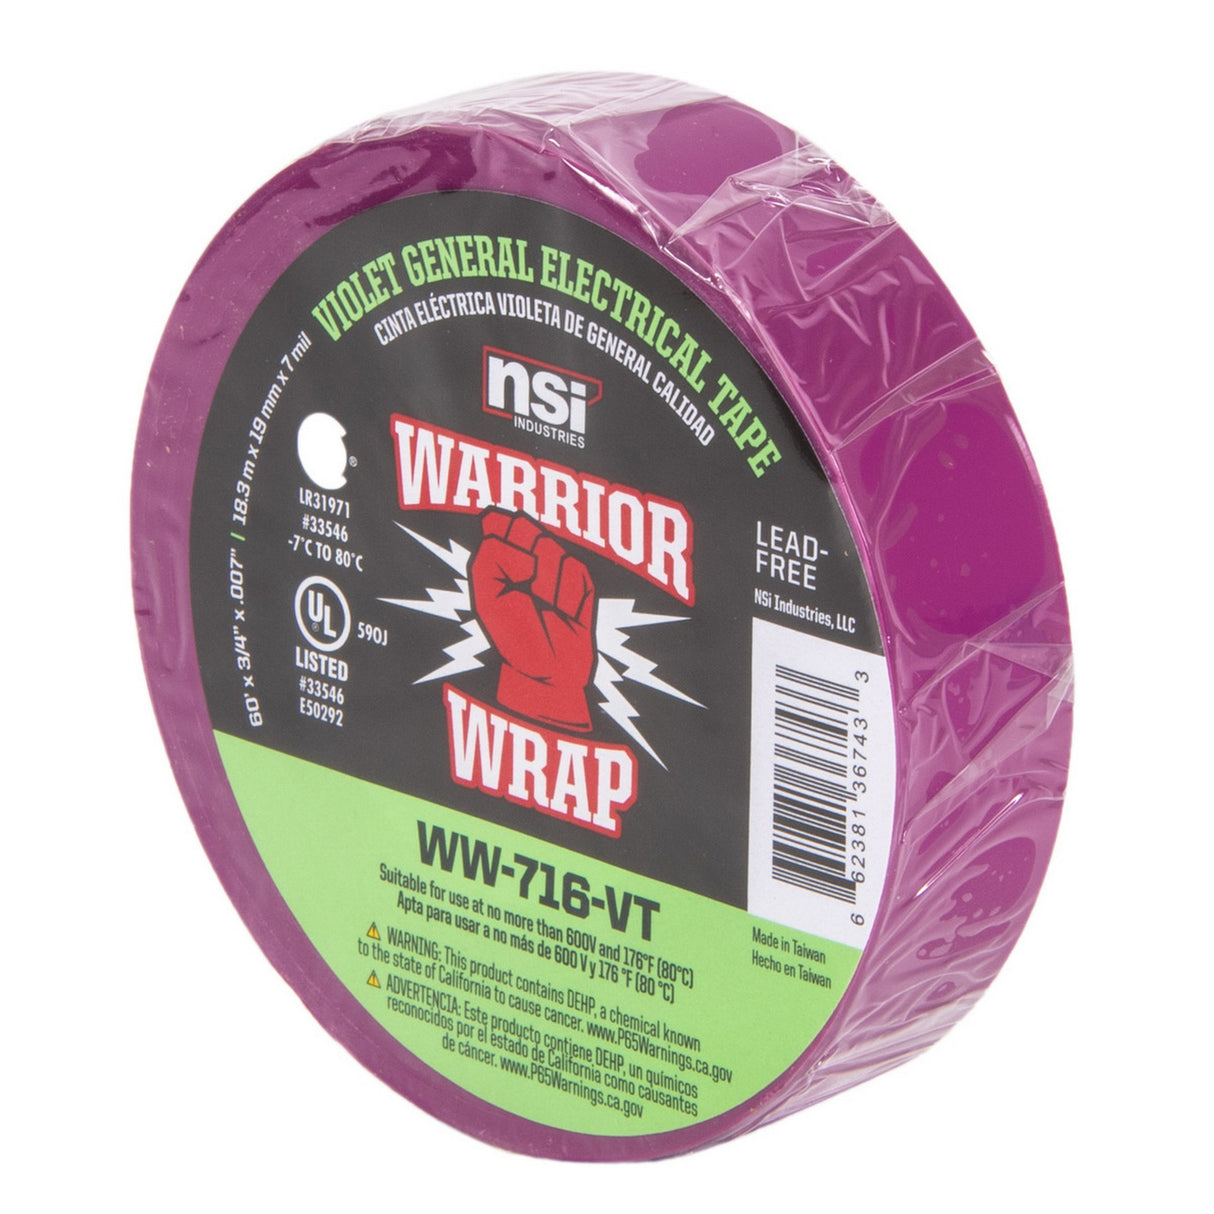 WarriorWrap WW-716-VT 716 General 7 mil Electrical Tape, Violet, .75-Inch W x 60-Feet